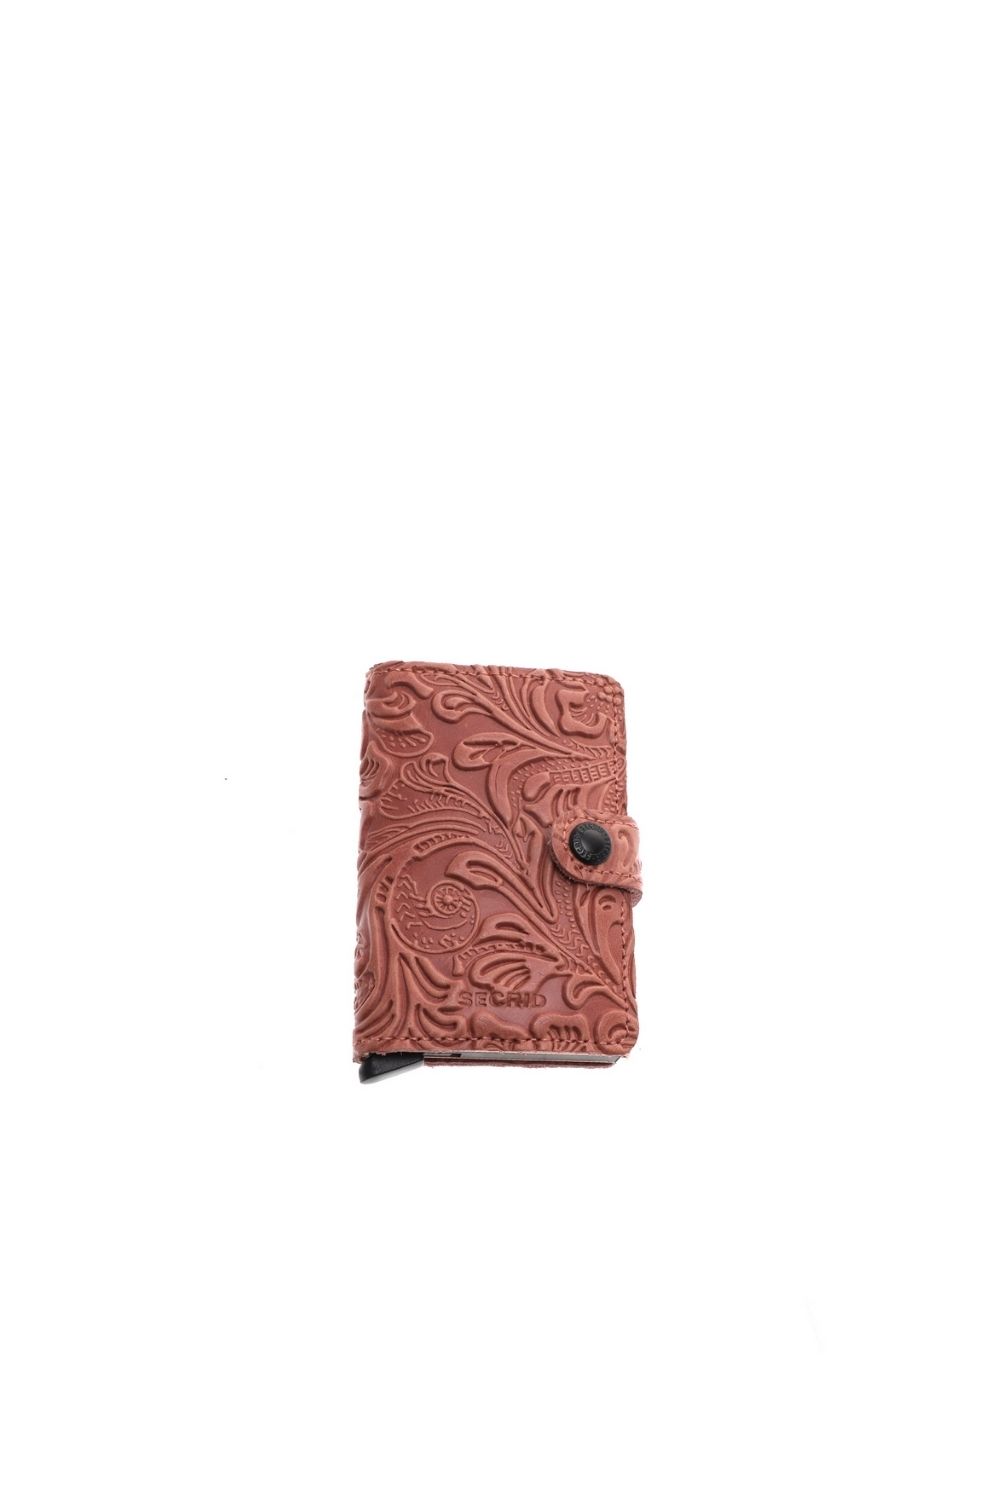 SECRID – Δερμάτινο πορτοφόλι SECRID Rose Miniwallet Ornament ροζ 1768124.0-00P7